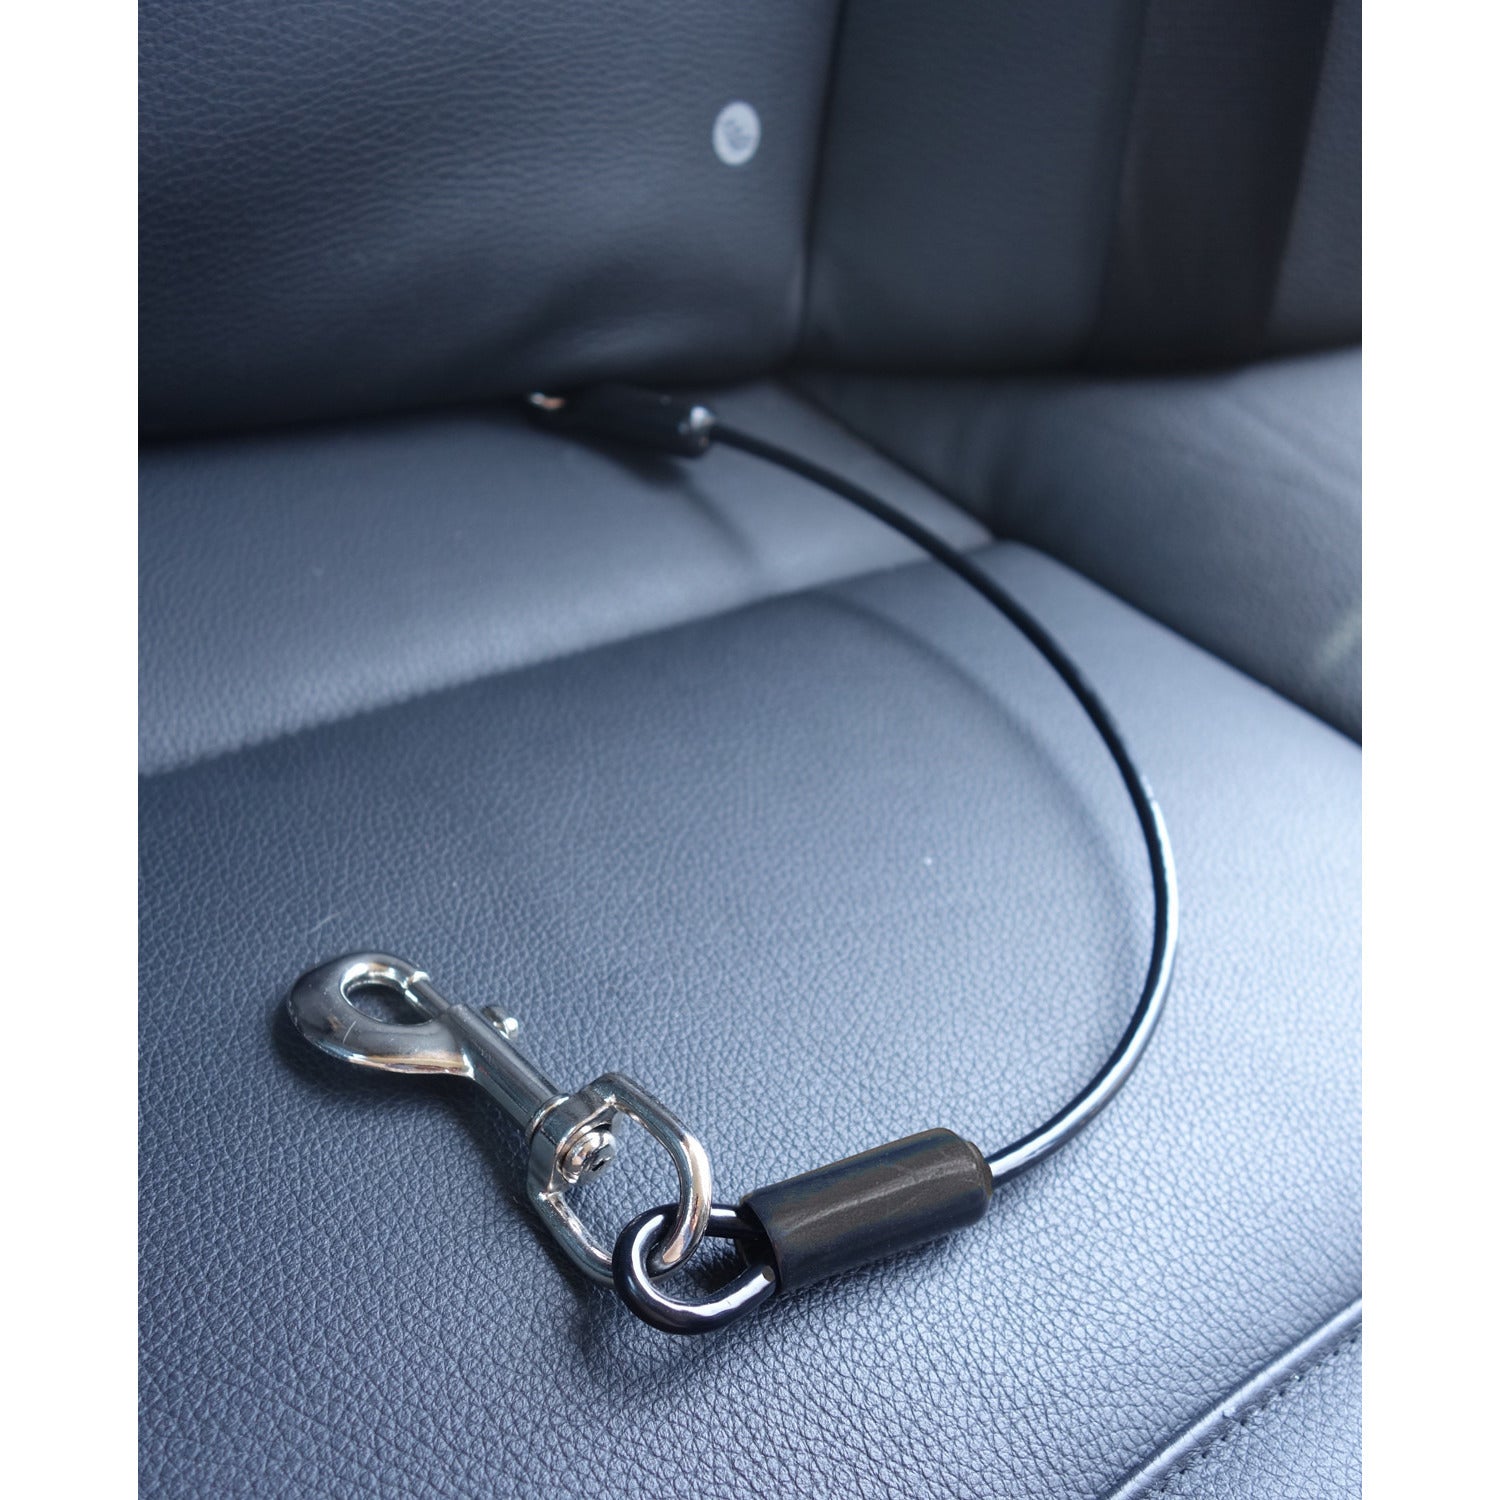 Dog Seatbelt - Heavy Duty No-Chew Dog Car Restraint Seat belt